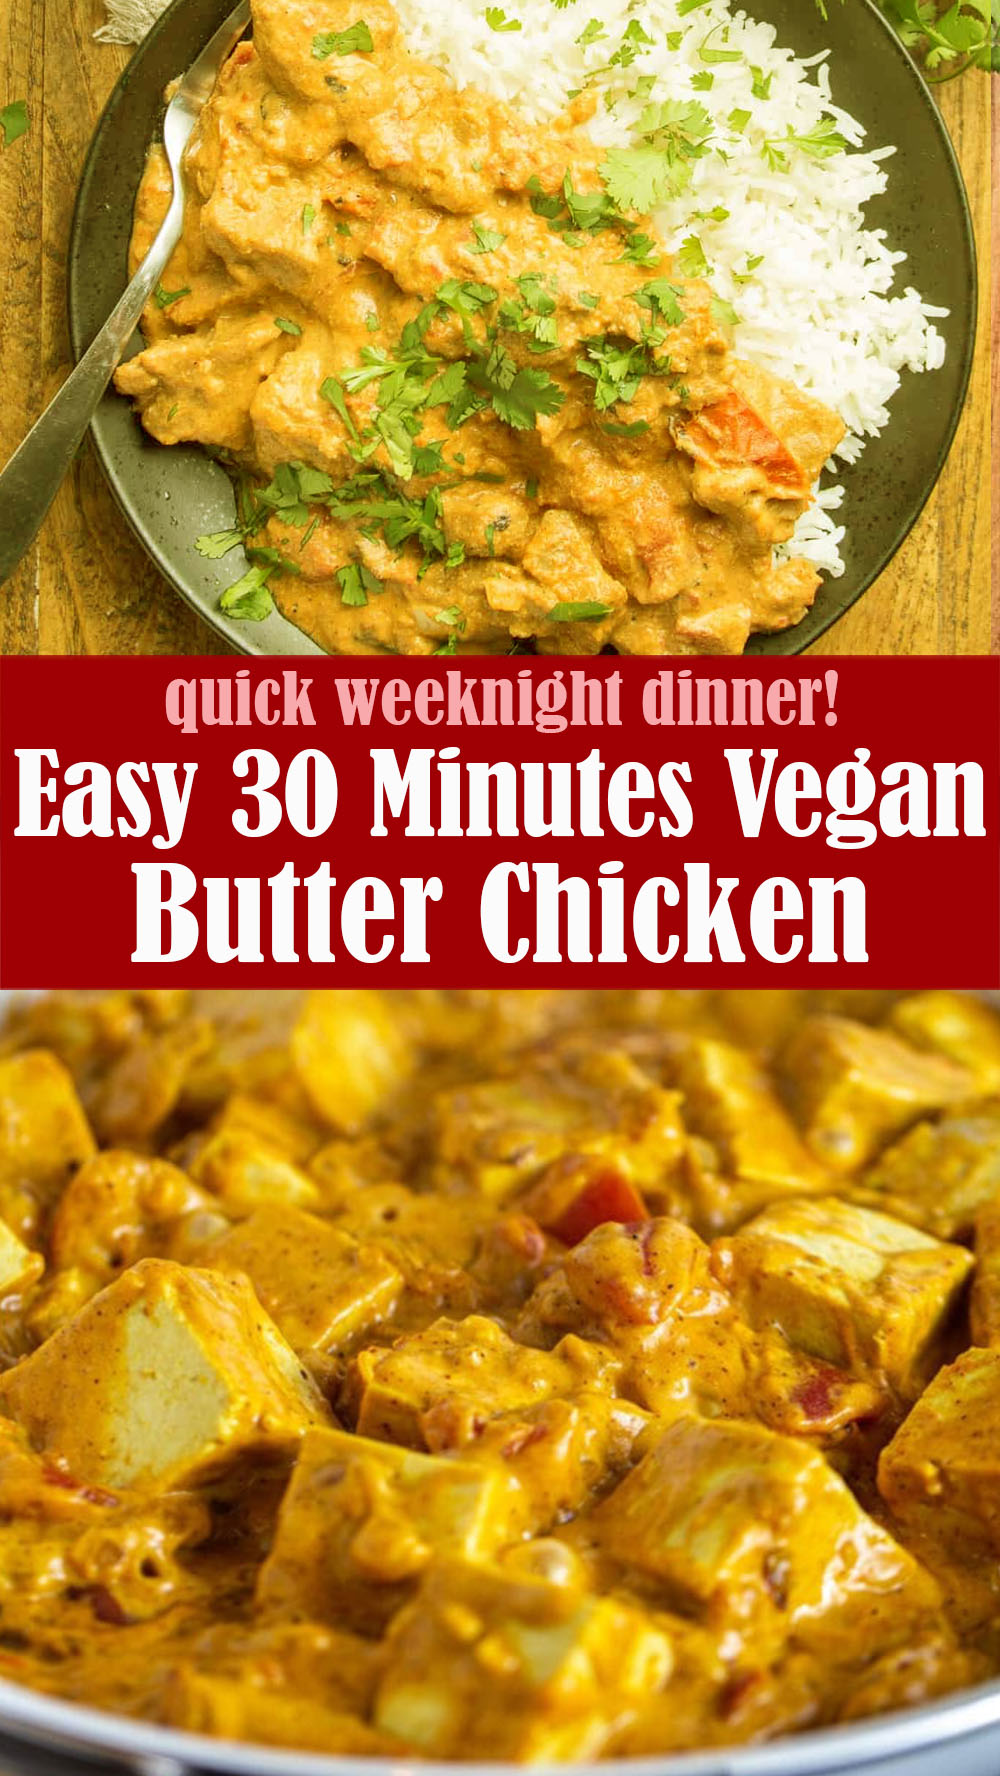 Easy 30 Minutes Vegan Butter Chicken